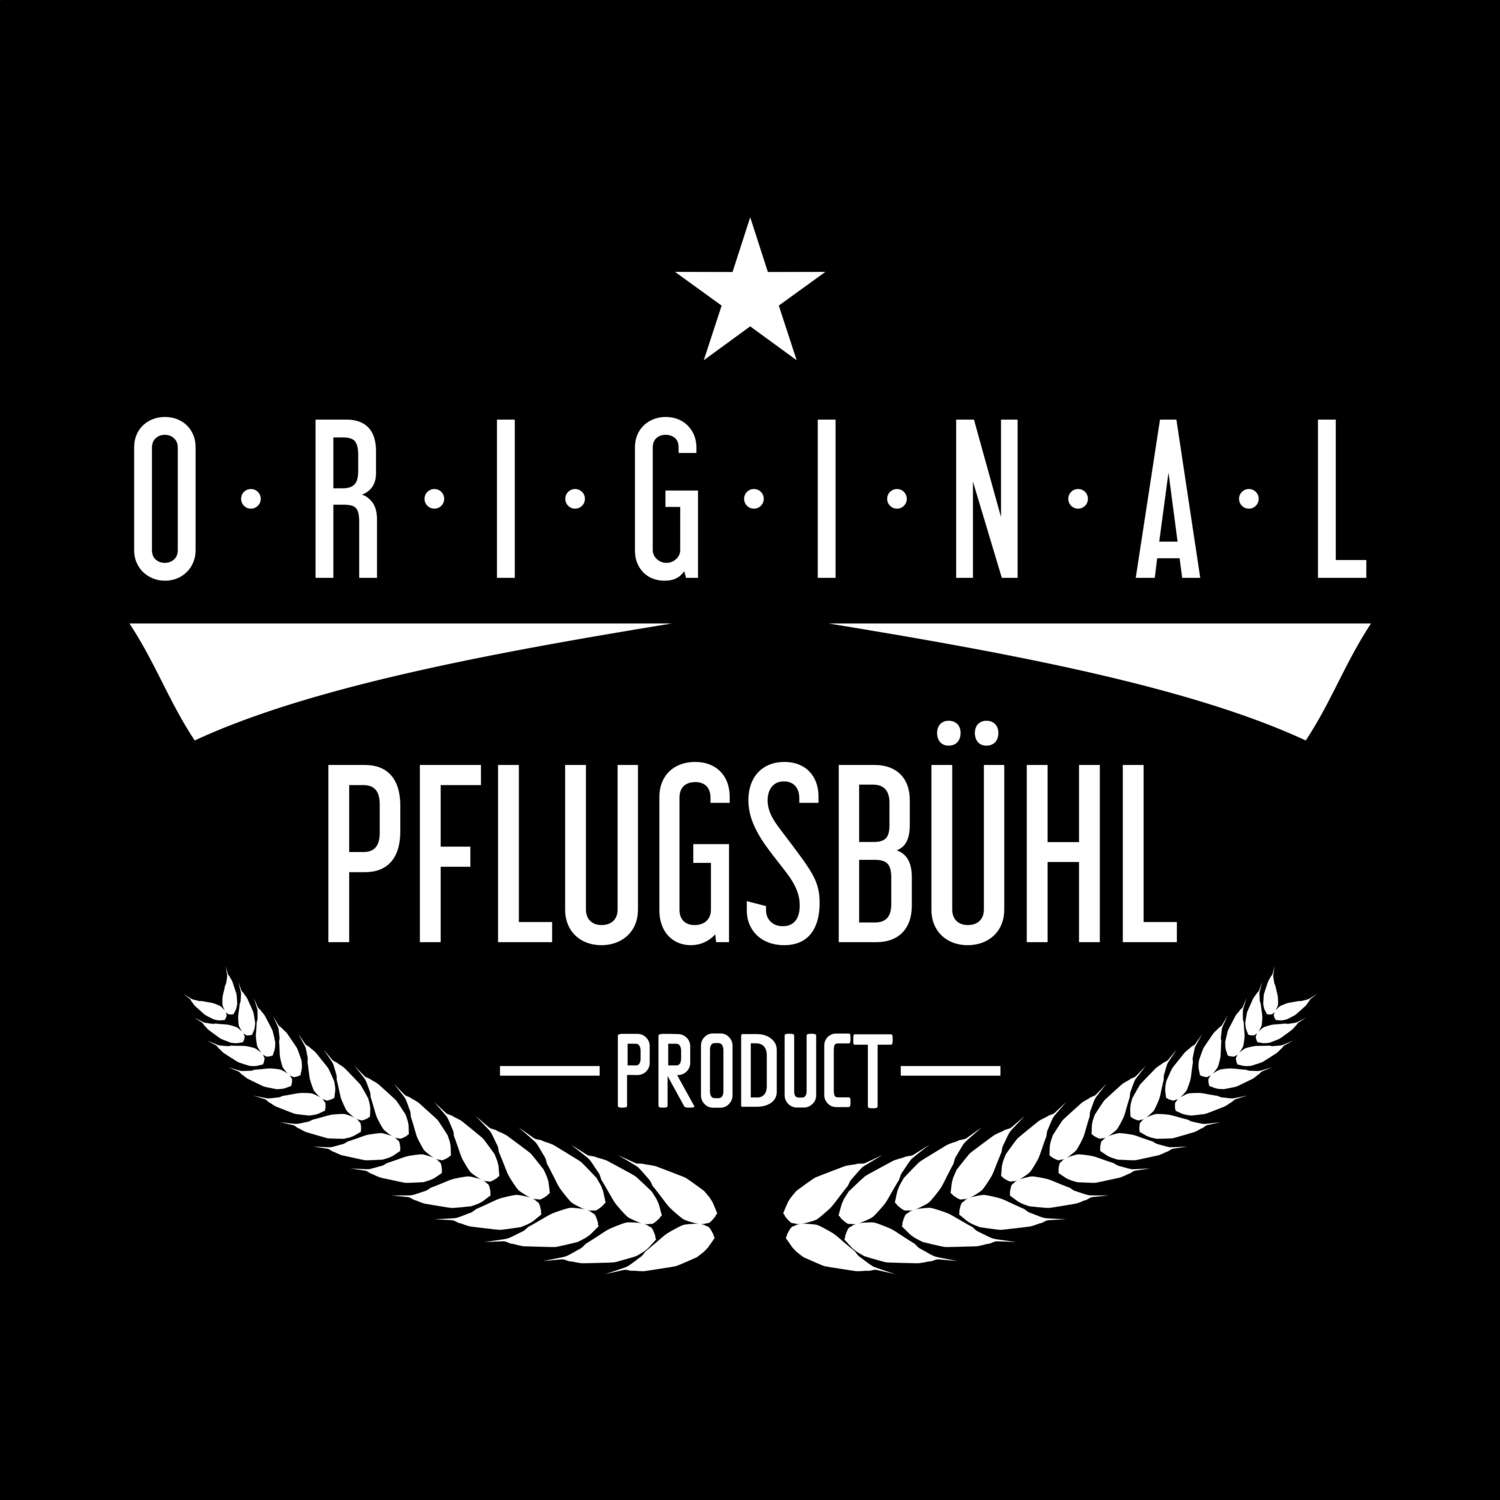 Pflugsbühl T-Shirt »Original Product«